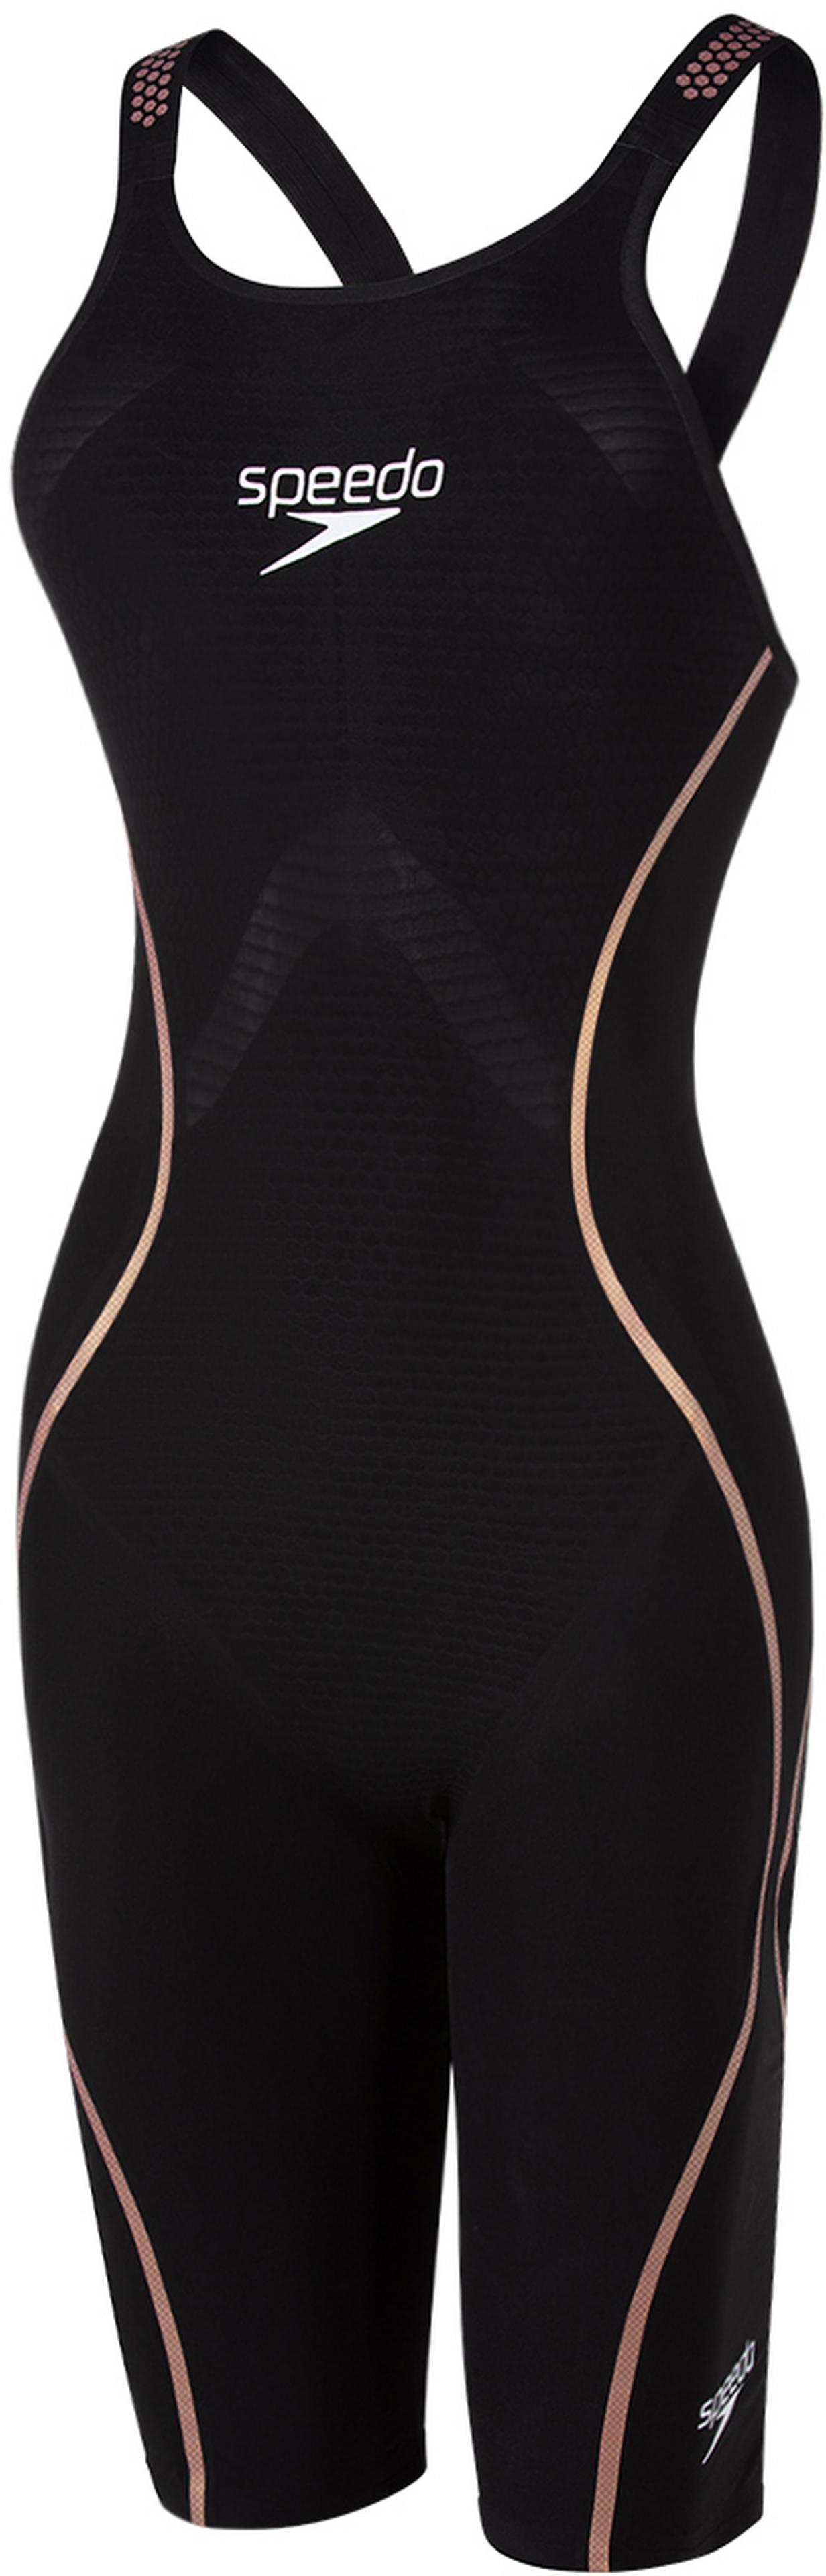 Speedo Women's Fastskin LZR Pure Intent Closed Back Kneeskin Tech Suit  Swimsuit at